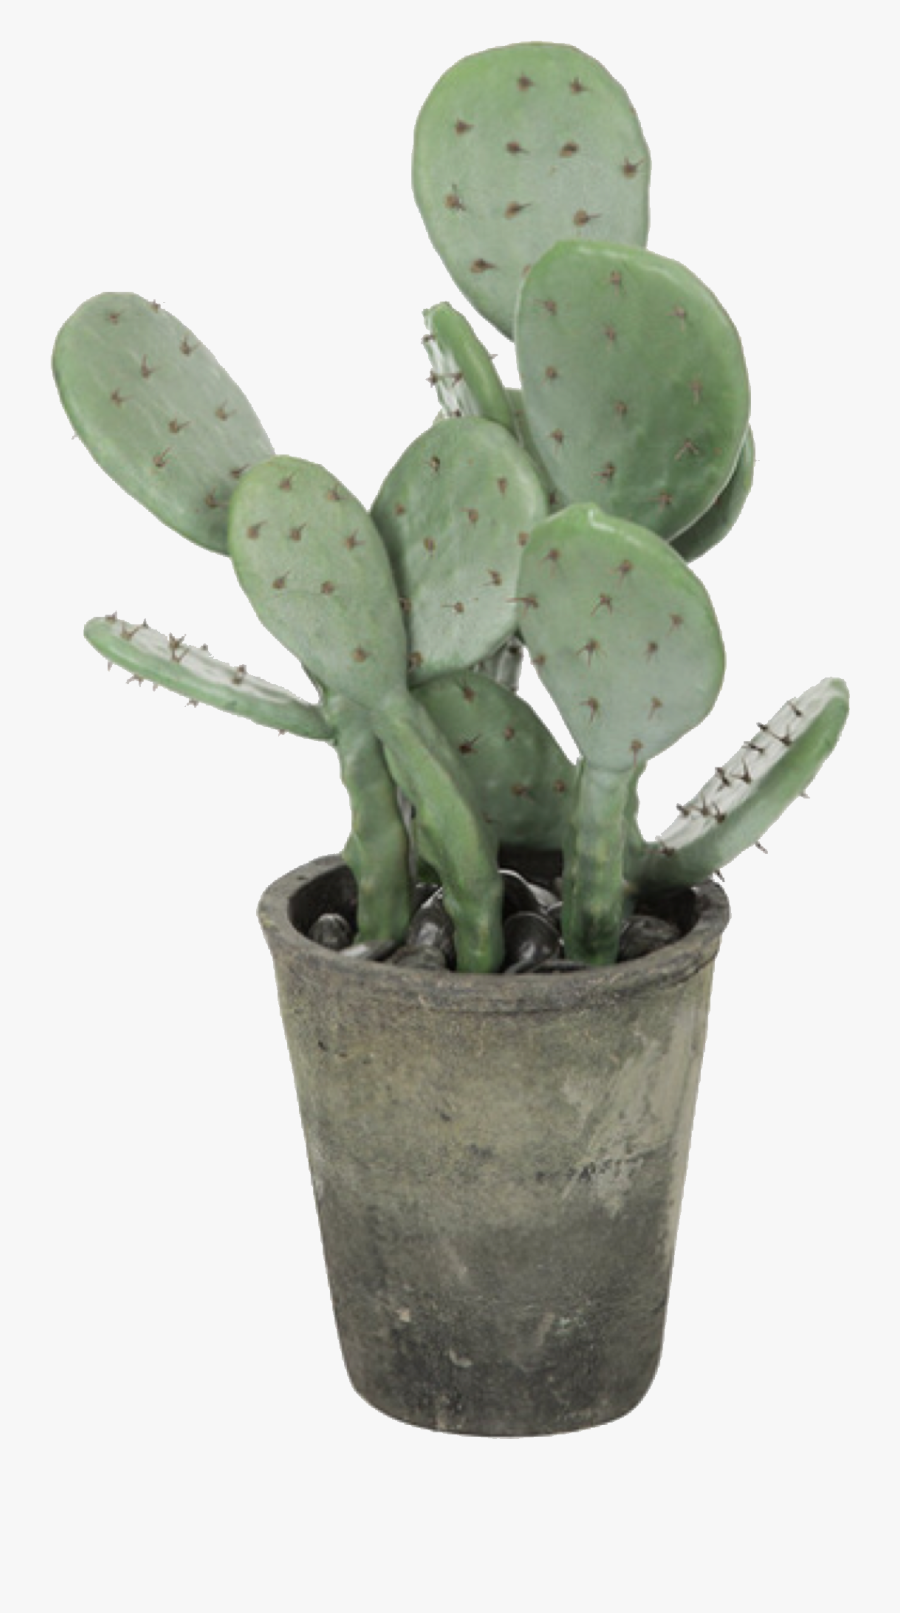 Cactus Aesthetic Png, Transparent Clipart